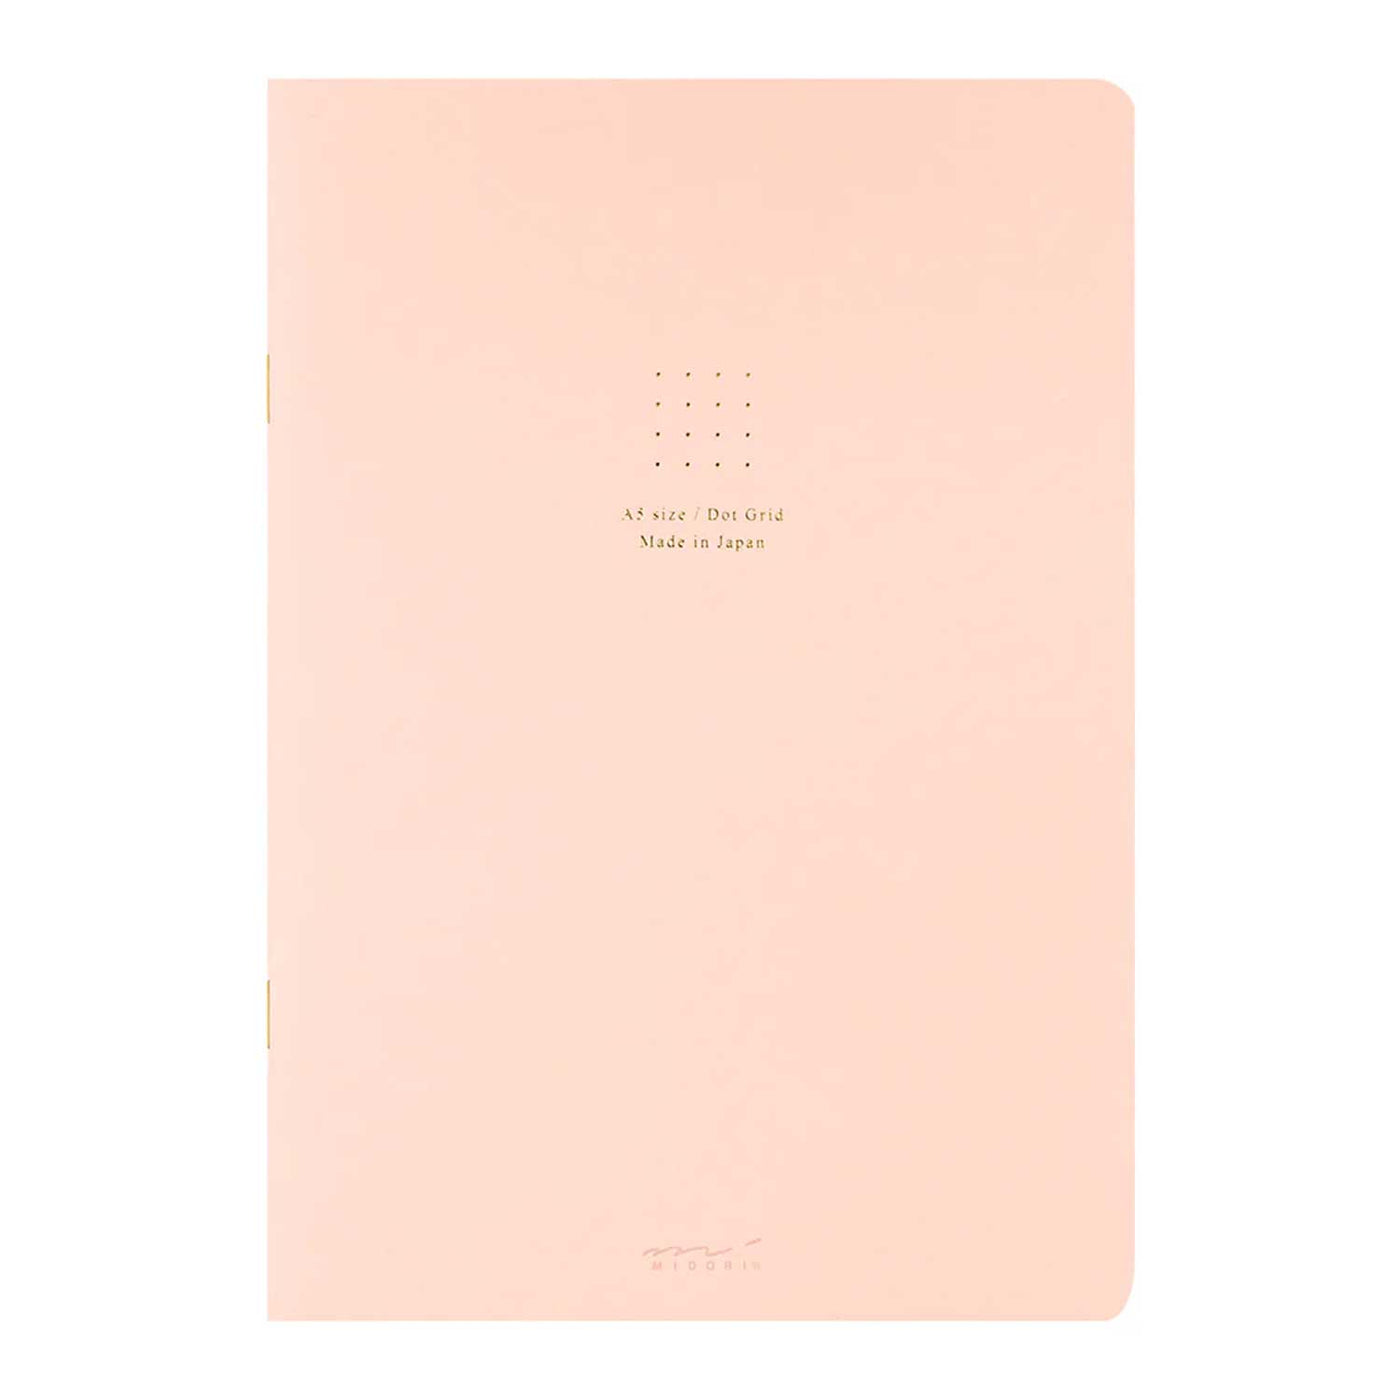 Midori Soft Colour Pink Notebook - A5 Dotted 1